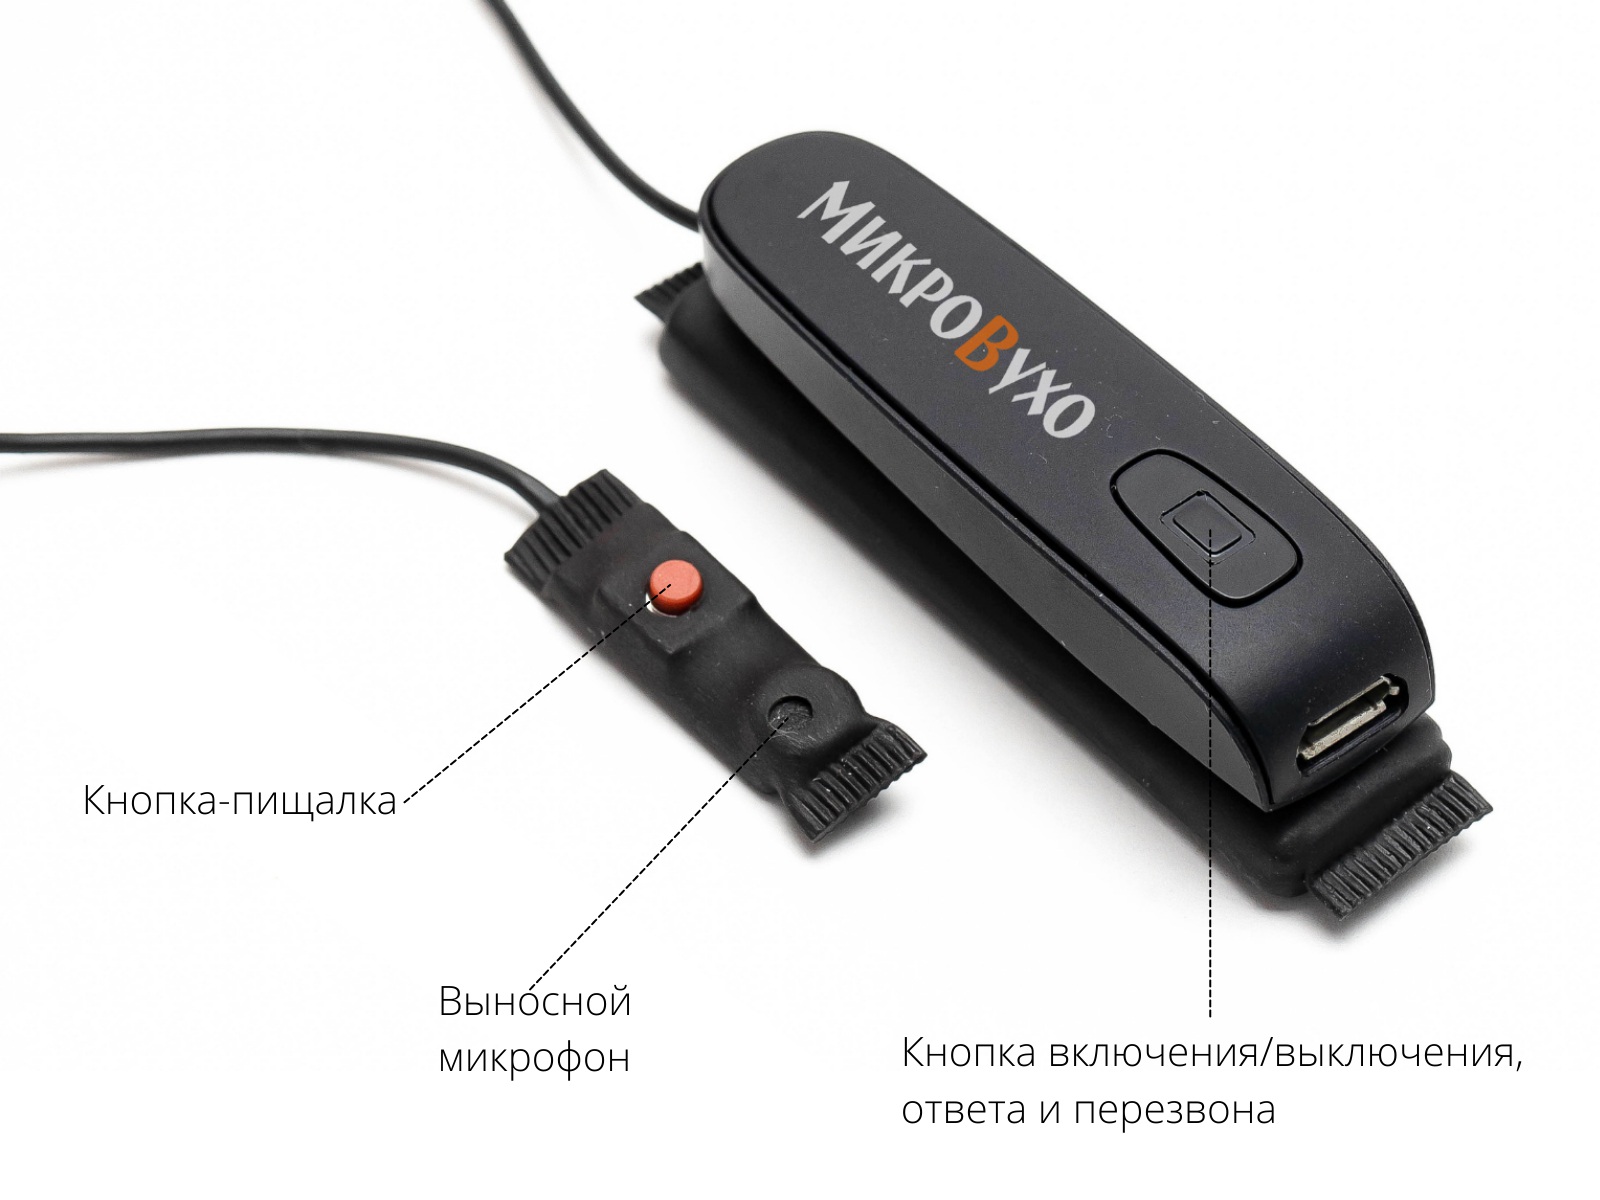 Bluetooth Box Basic Plus с кнопкой-пищалкой и магнитами 2 мм - изображение 2